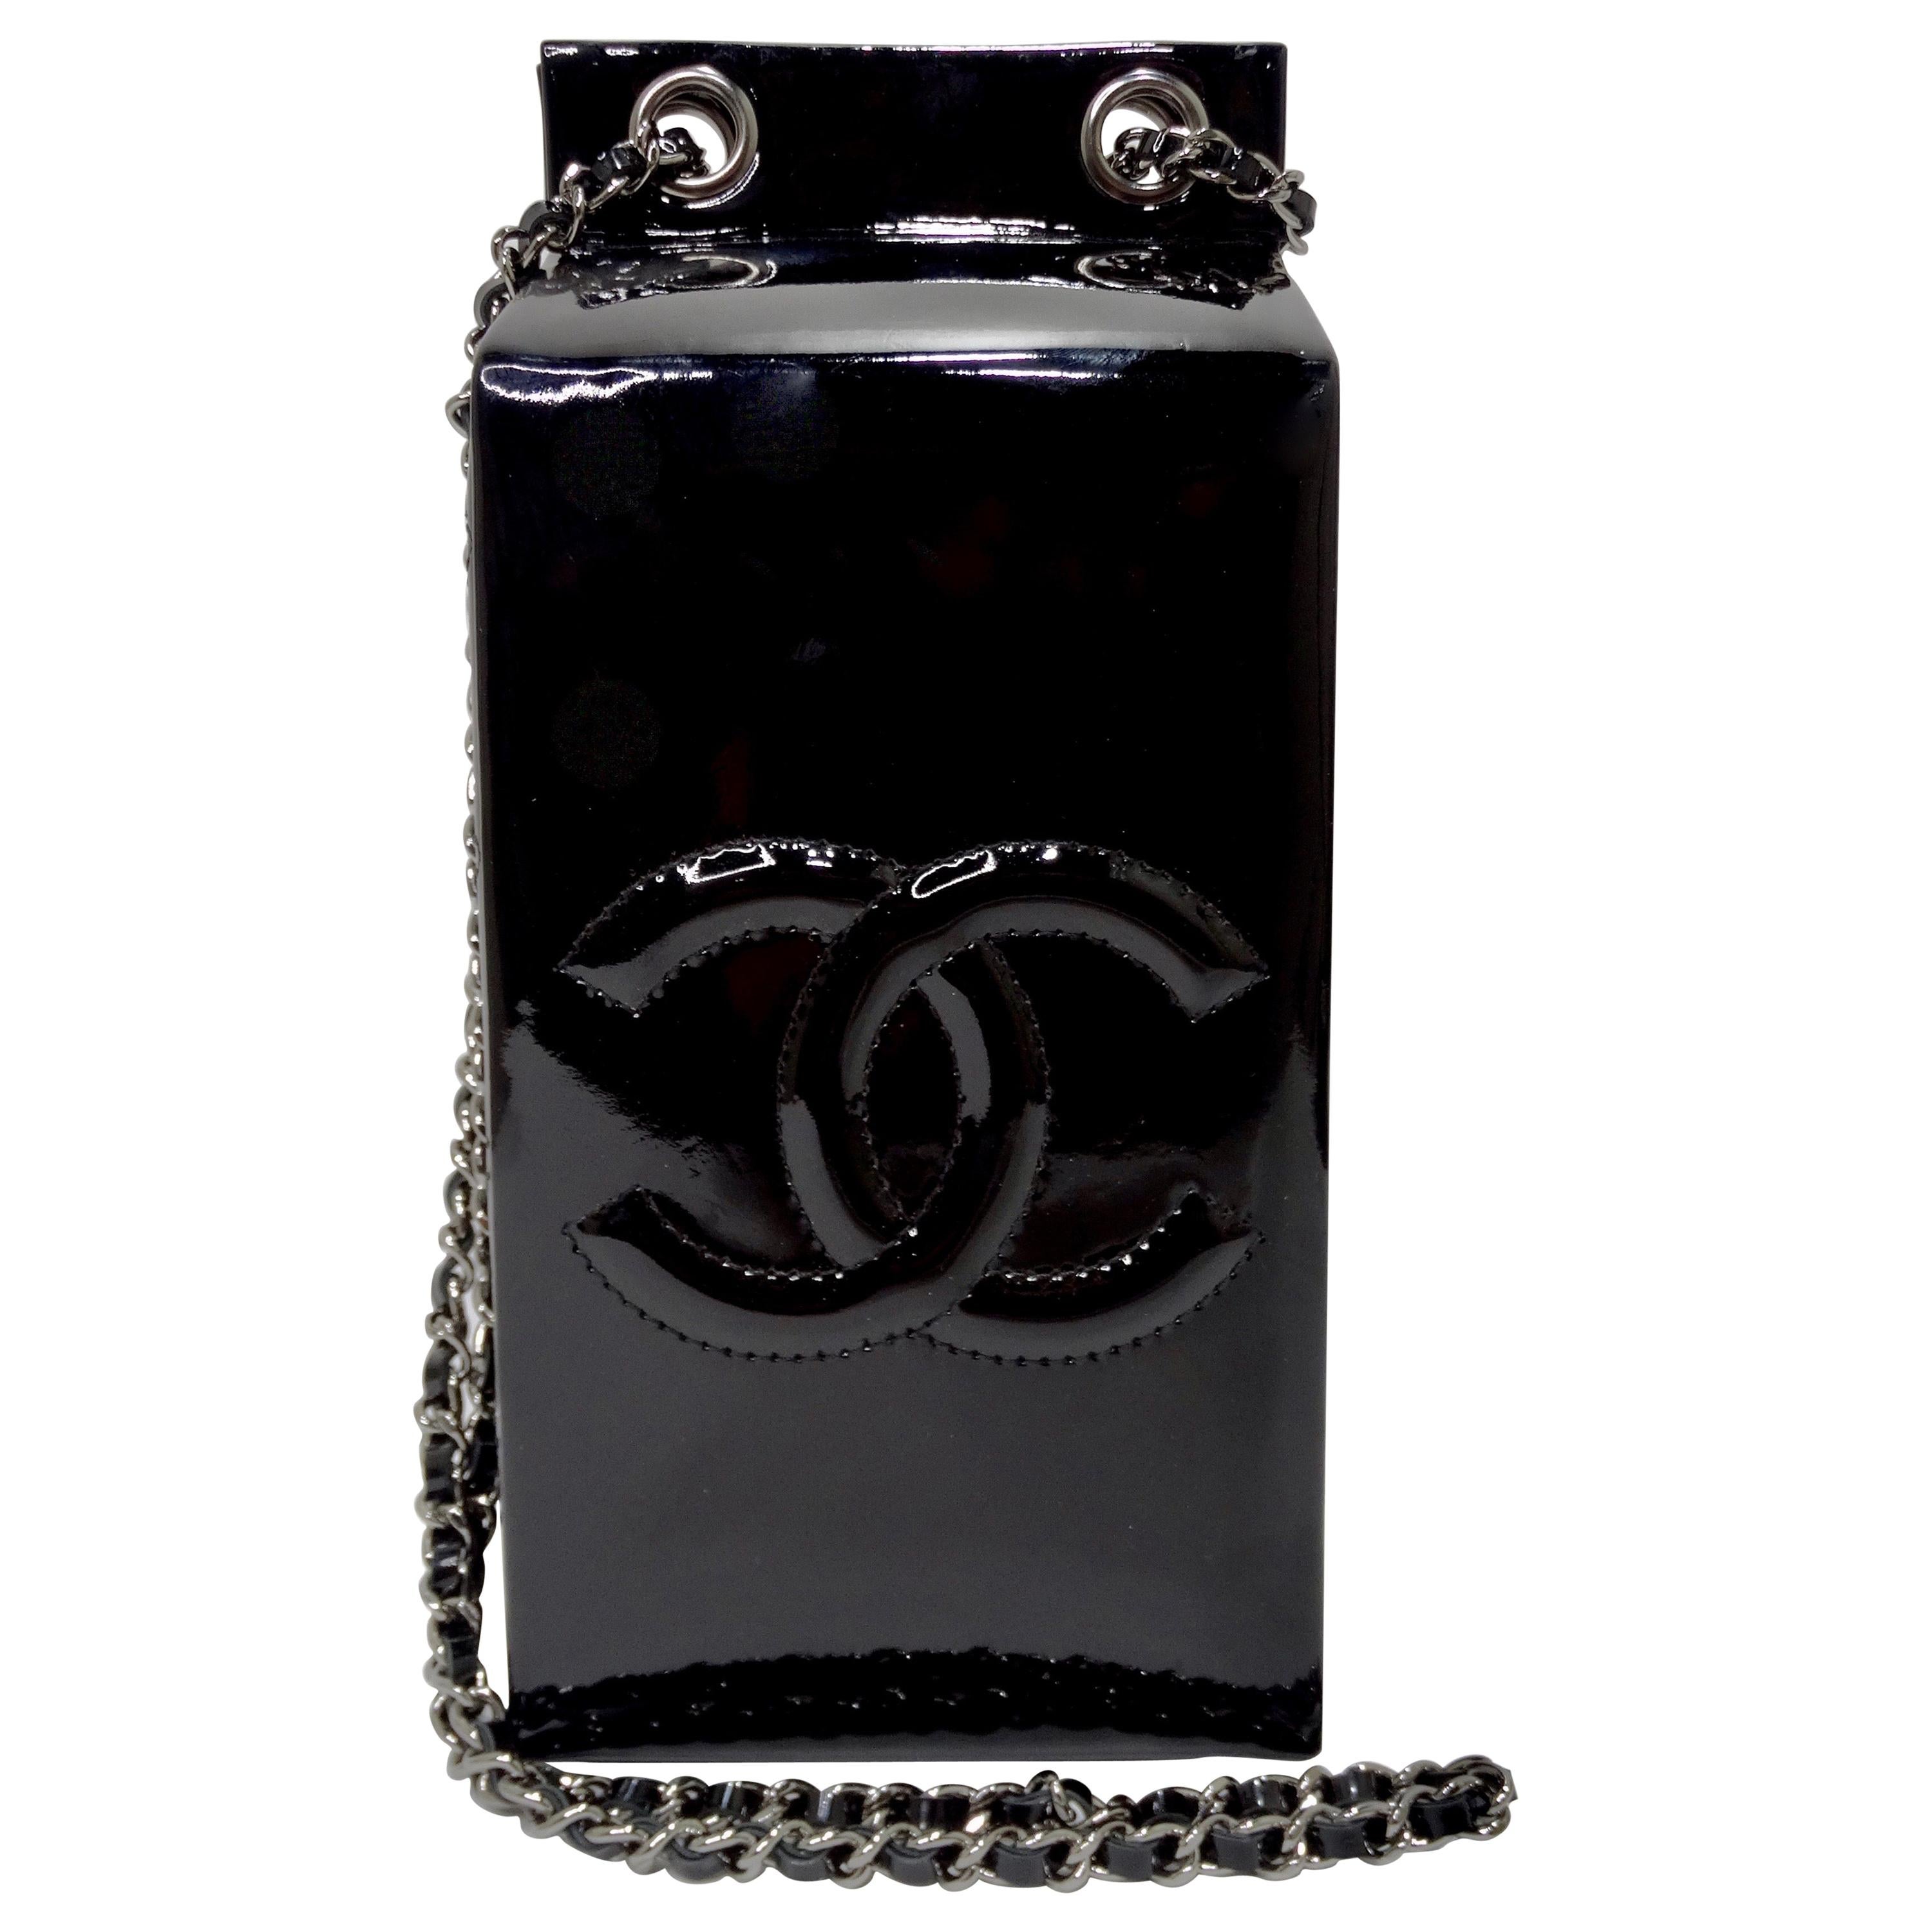 Chanel Milk Carton - For Sale on 1stDibs | chanel milk carton bag, silver chanel  milk carton bag, chanel milk bag